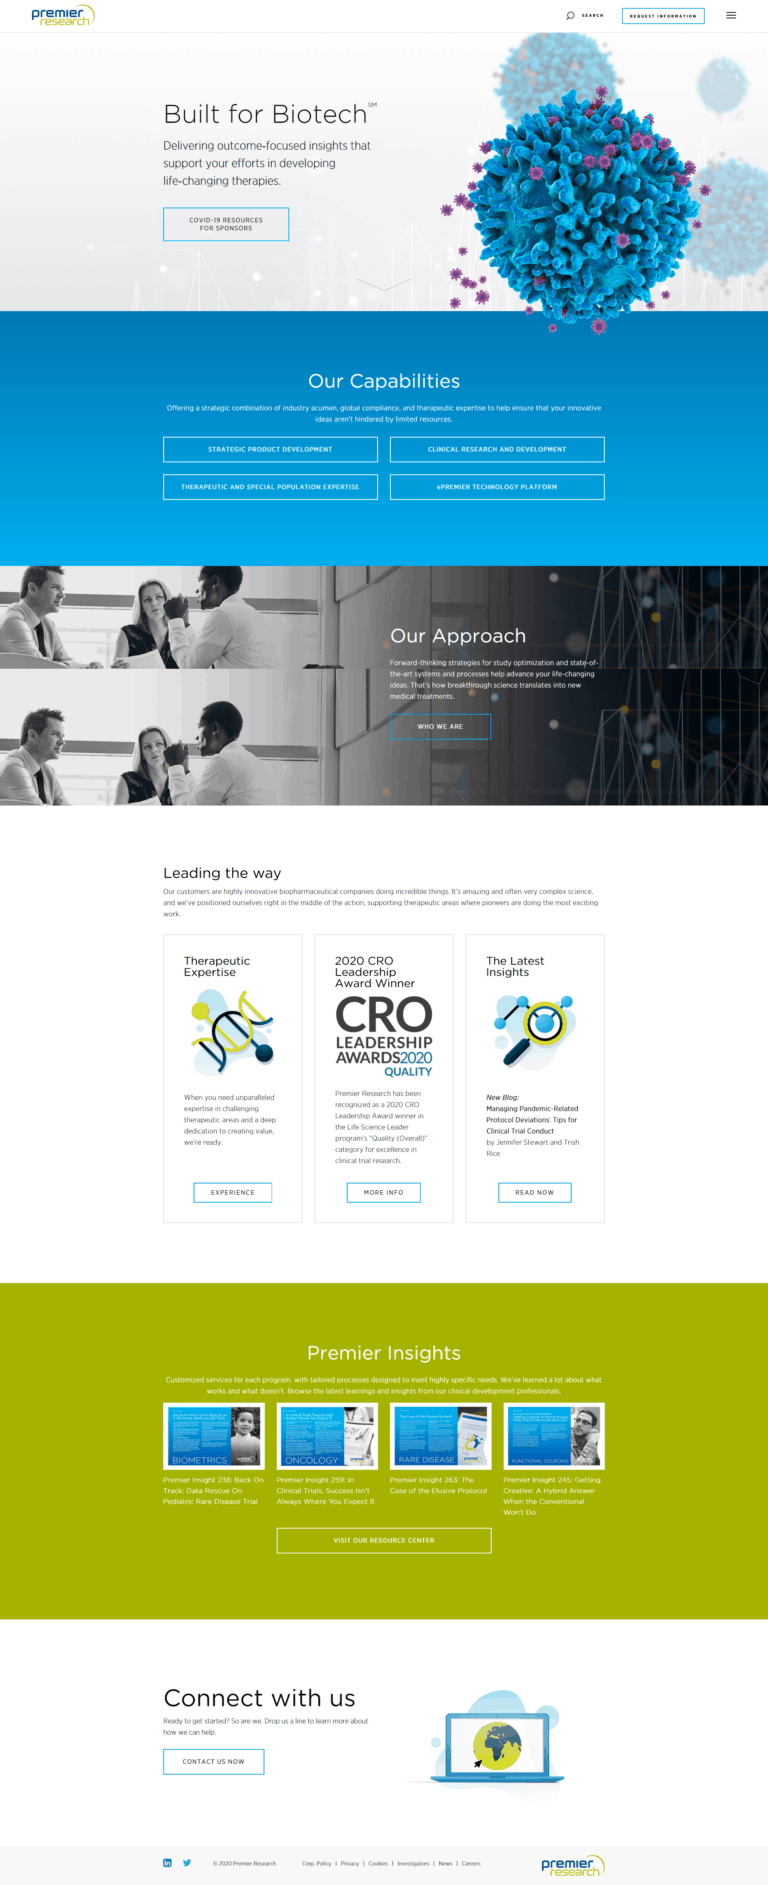 Premier Research pharmaceutical web design screenshot